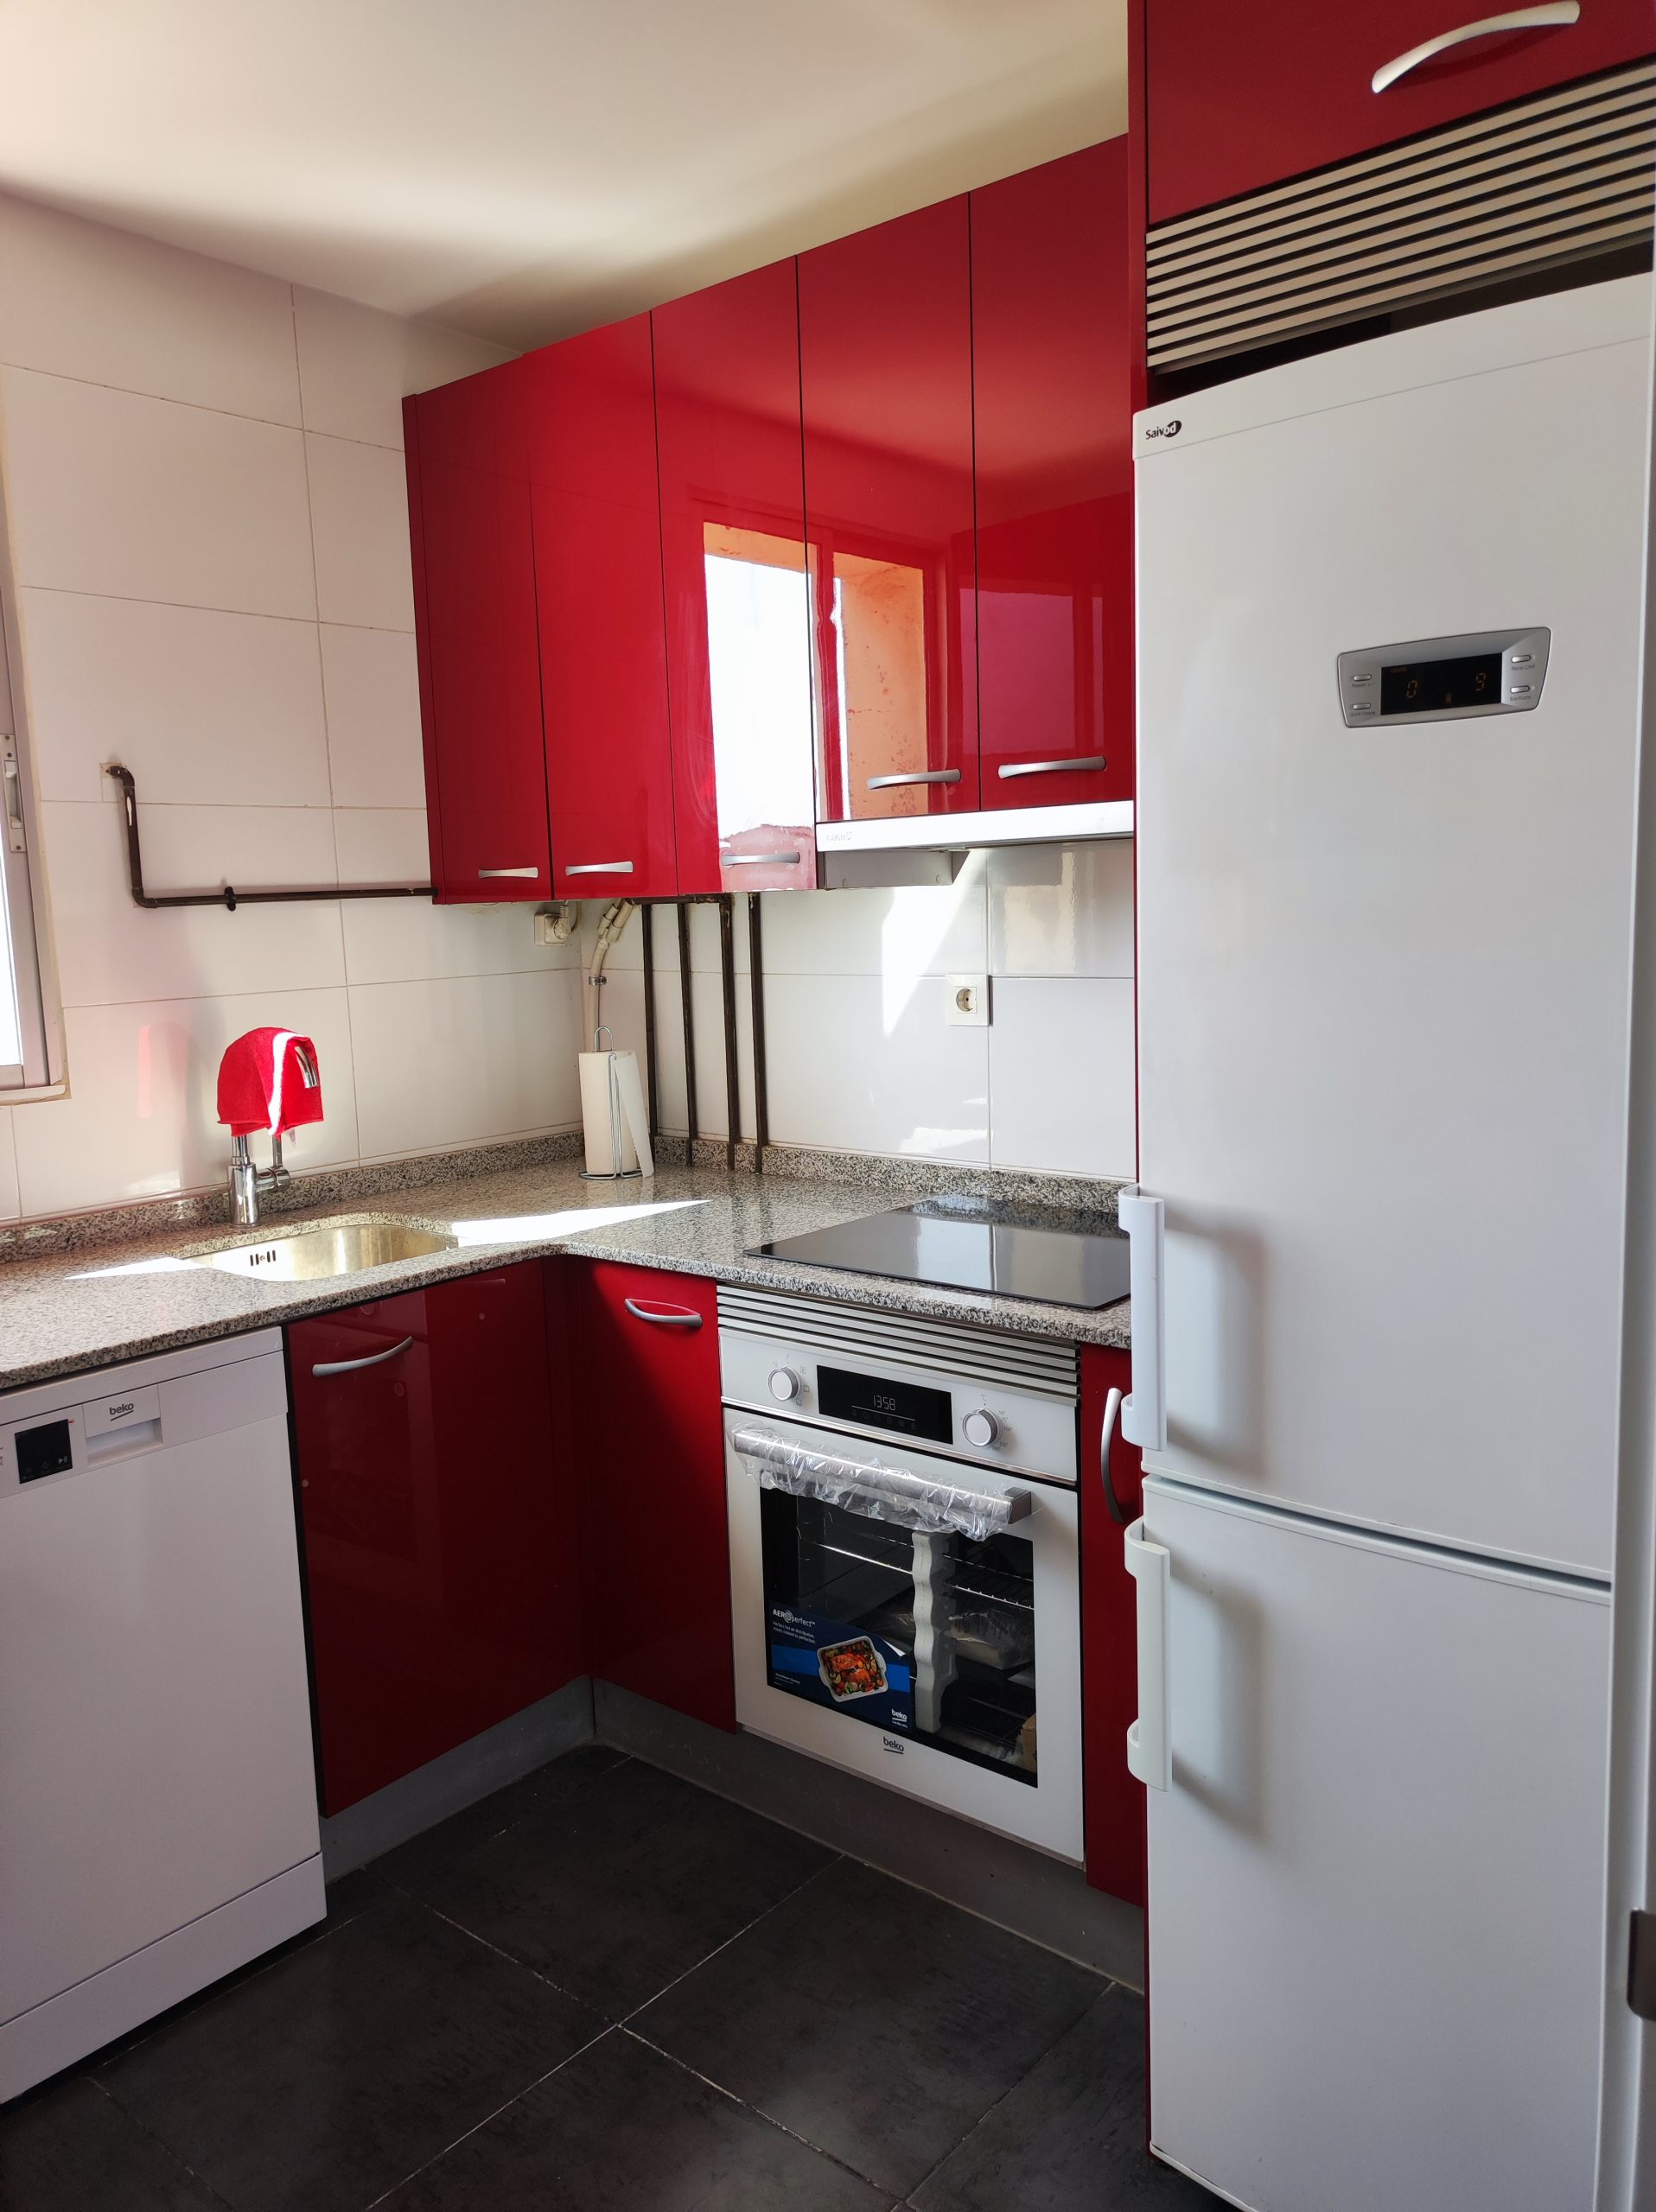 apartment for rent in Zaragoza - kitchen